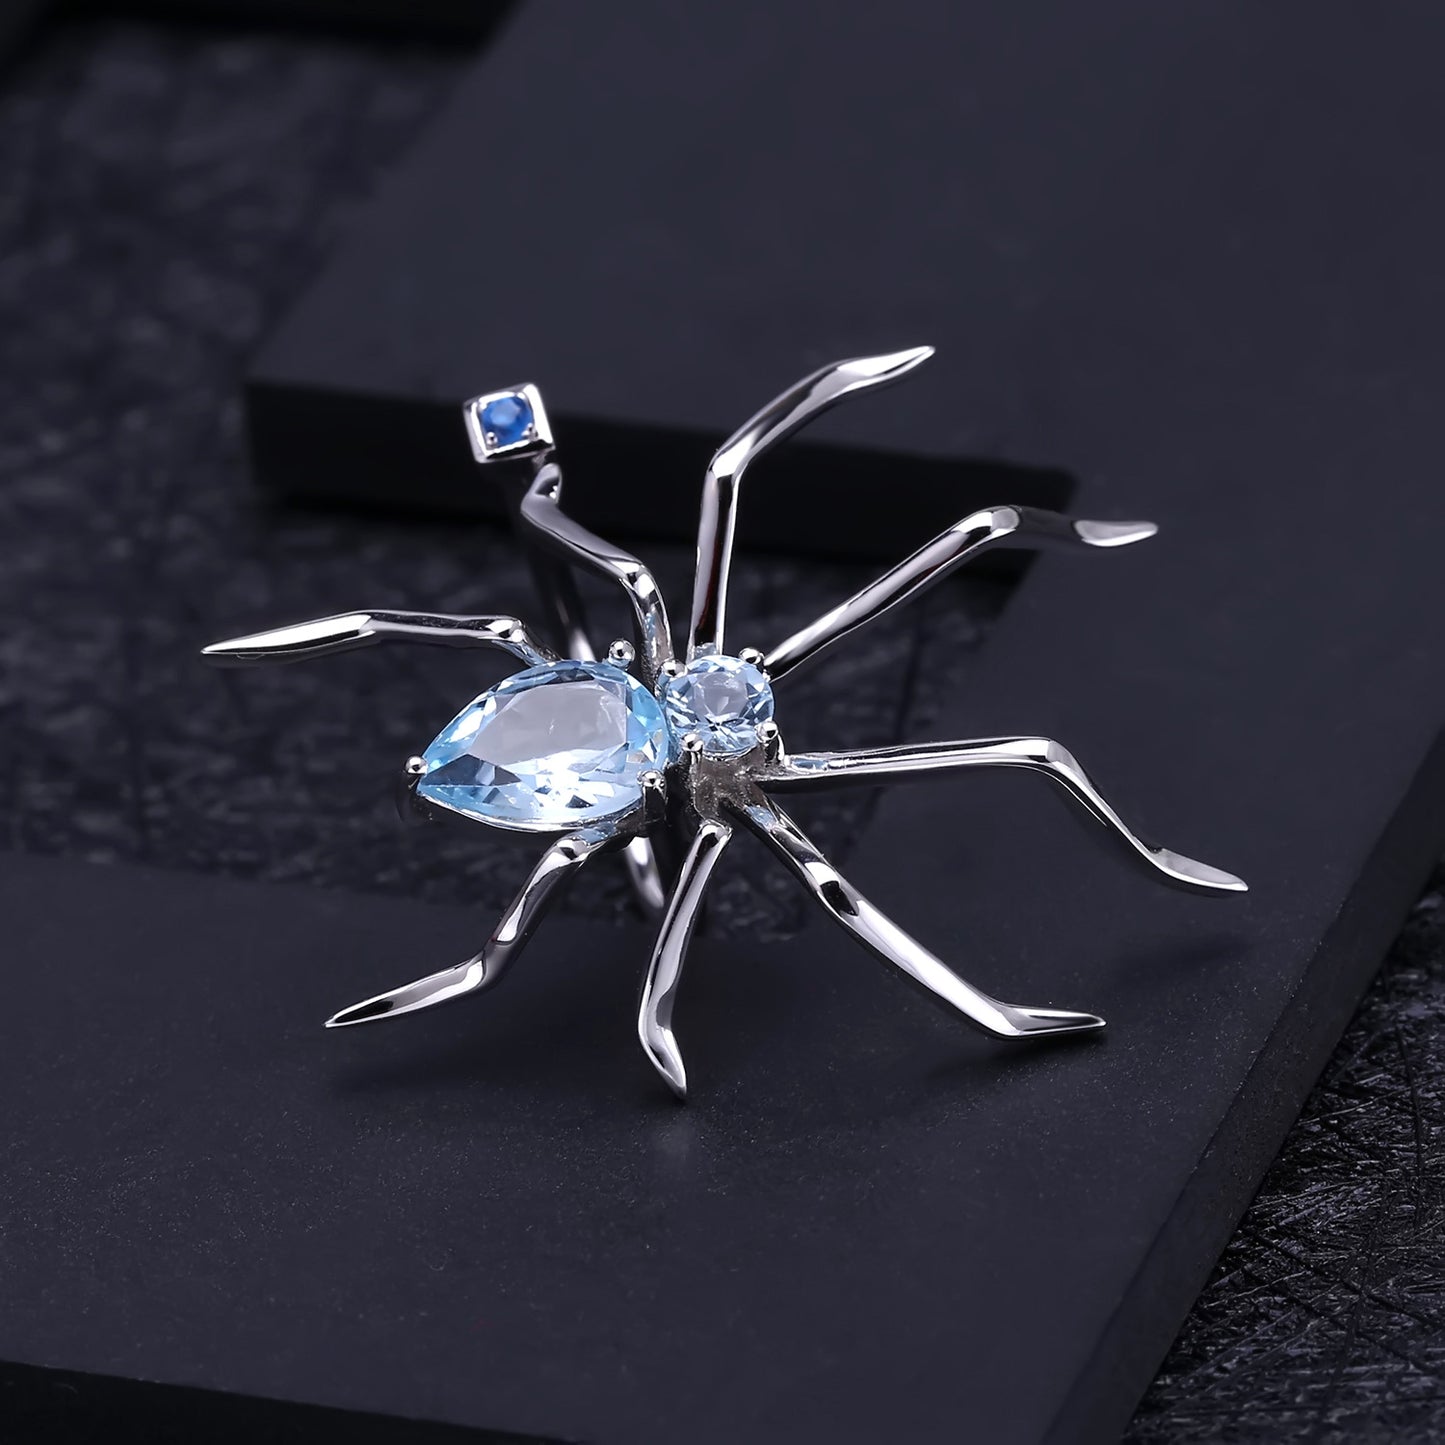 Spider Design Natural Gemstones Opening Silver Ring